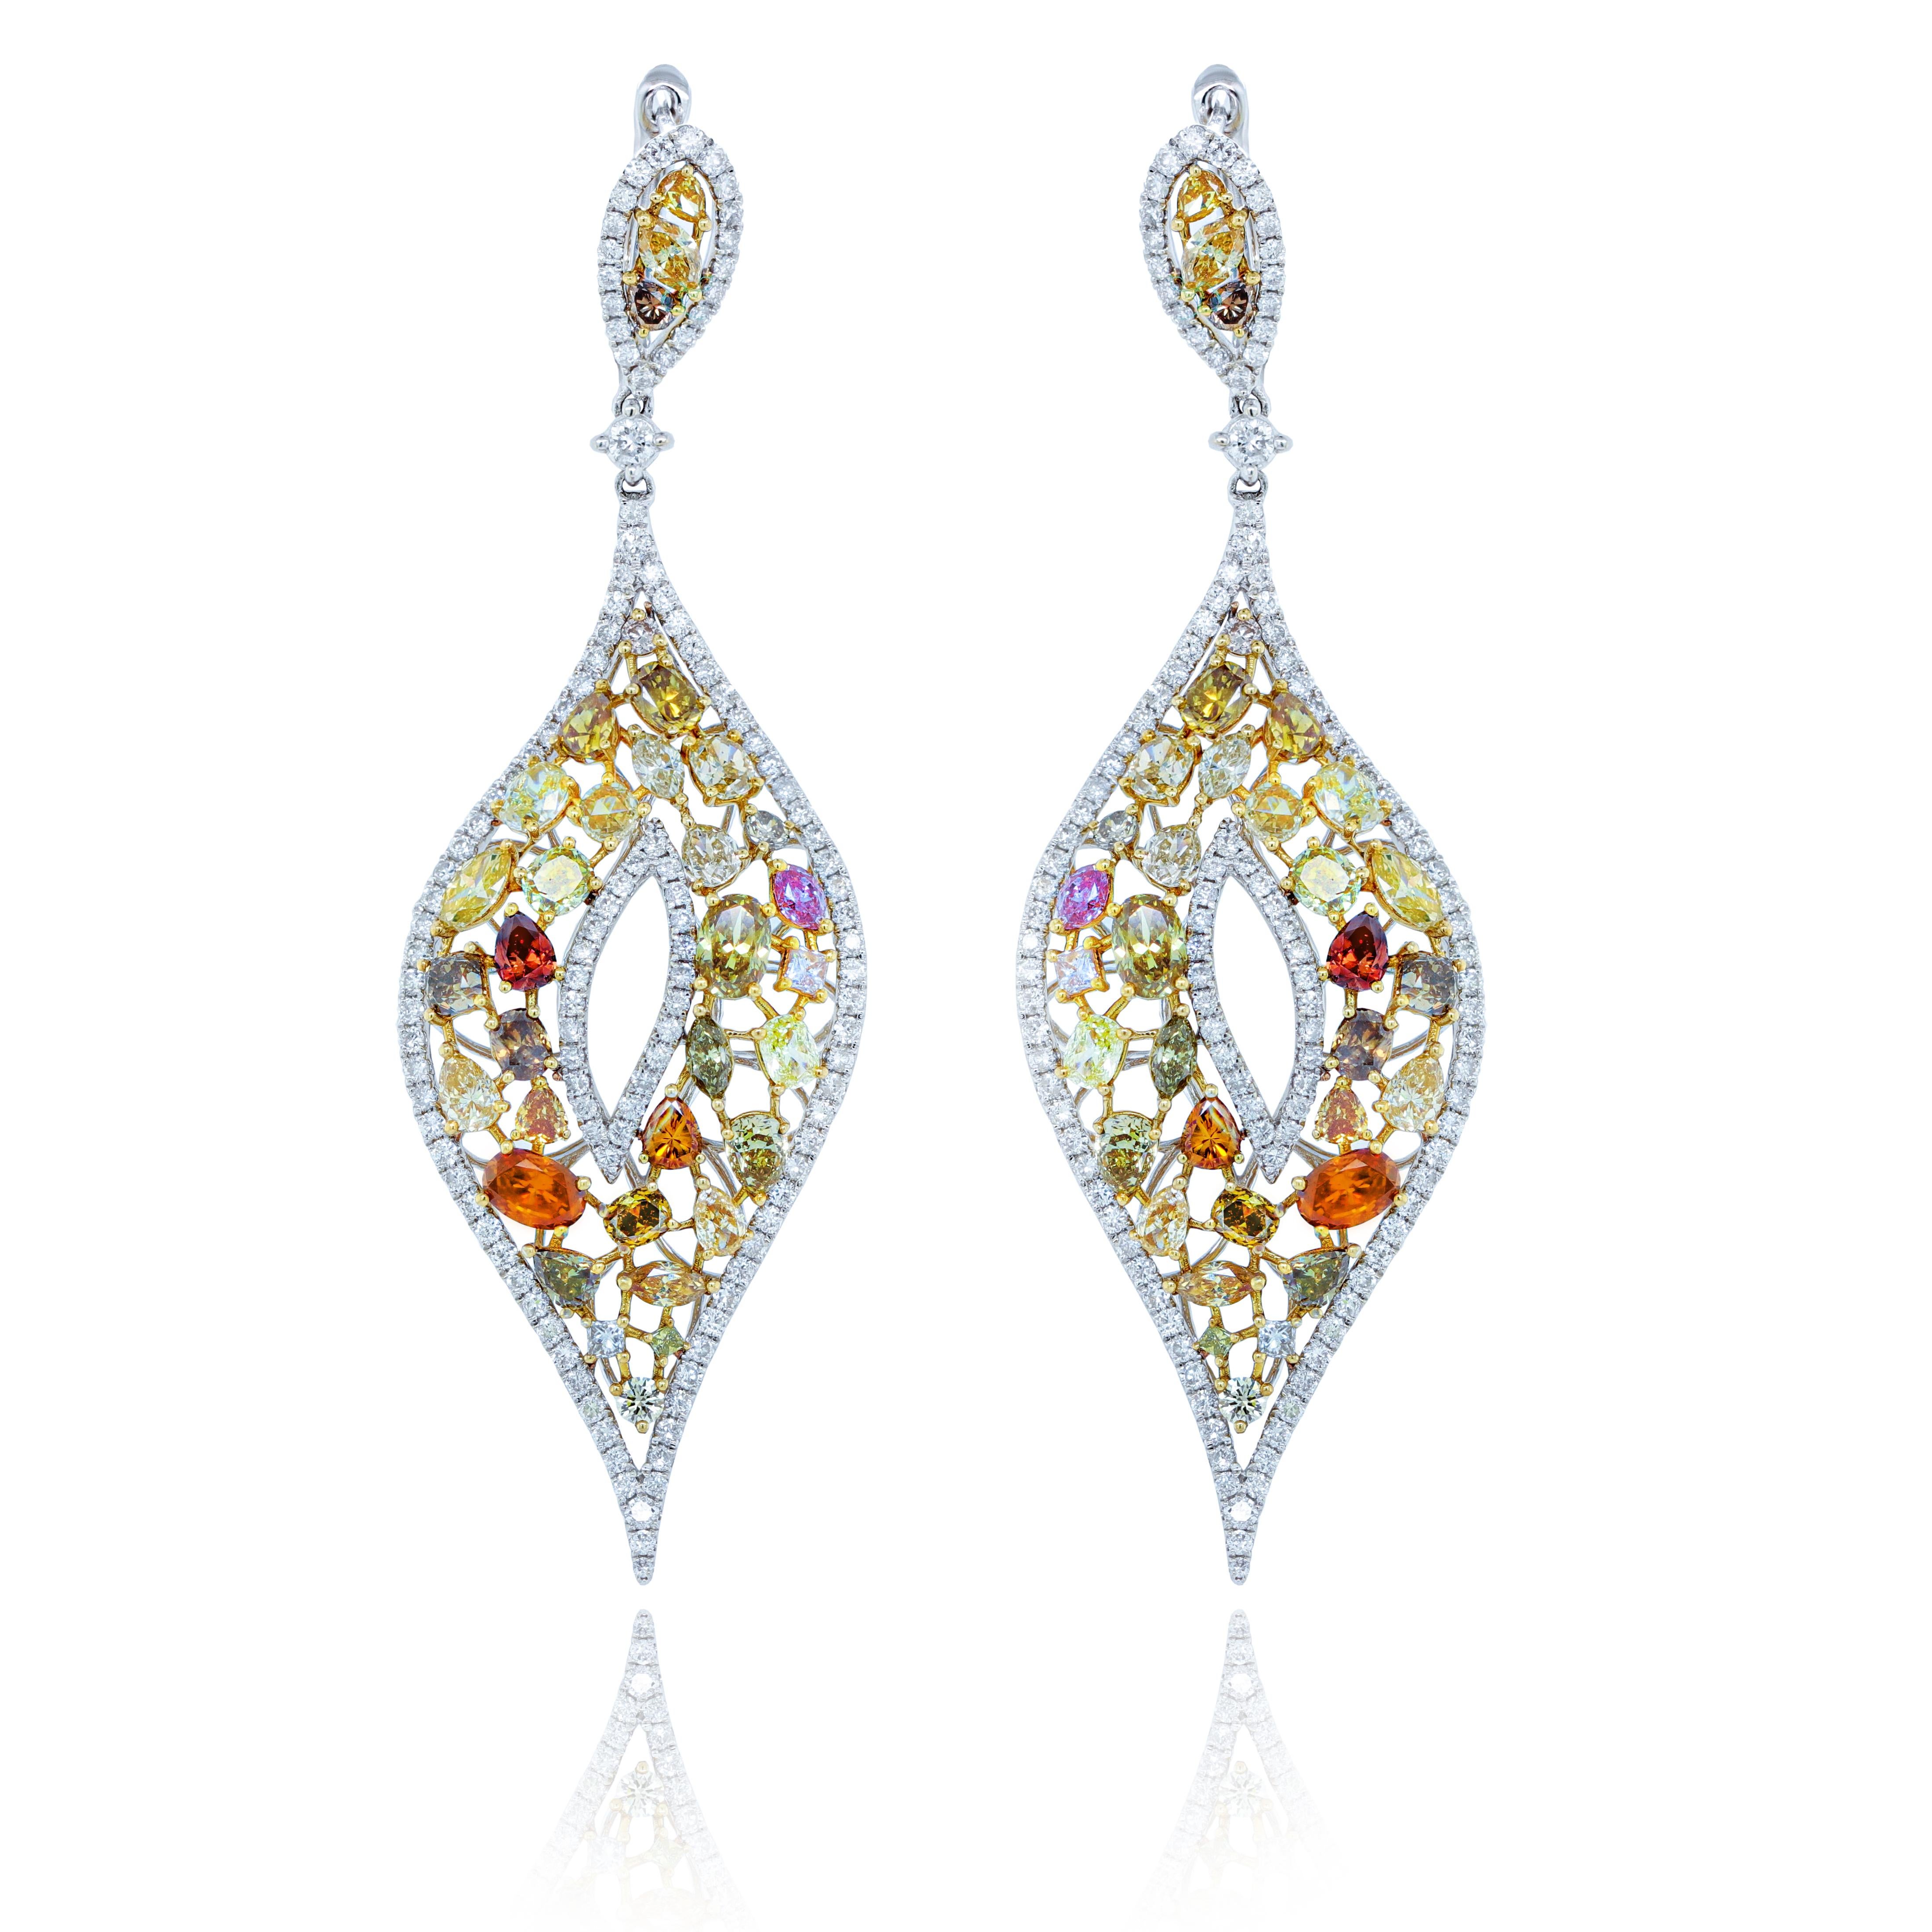 18k white gold diamond earrings features 11.50 carat of diamonds
